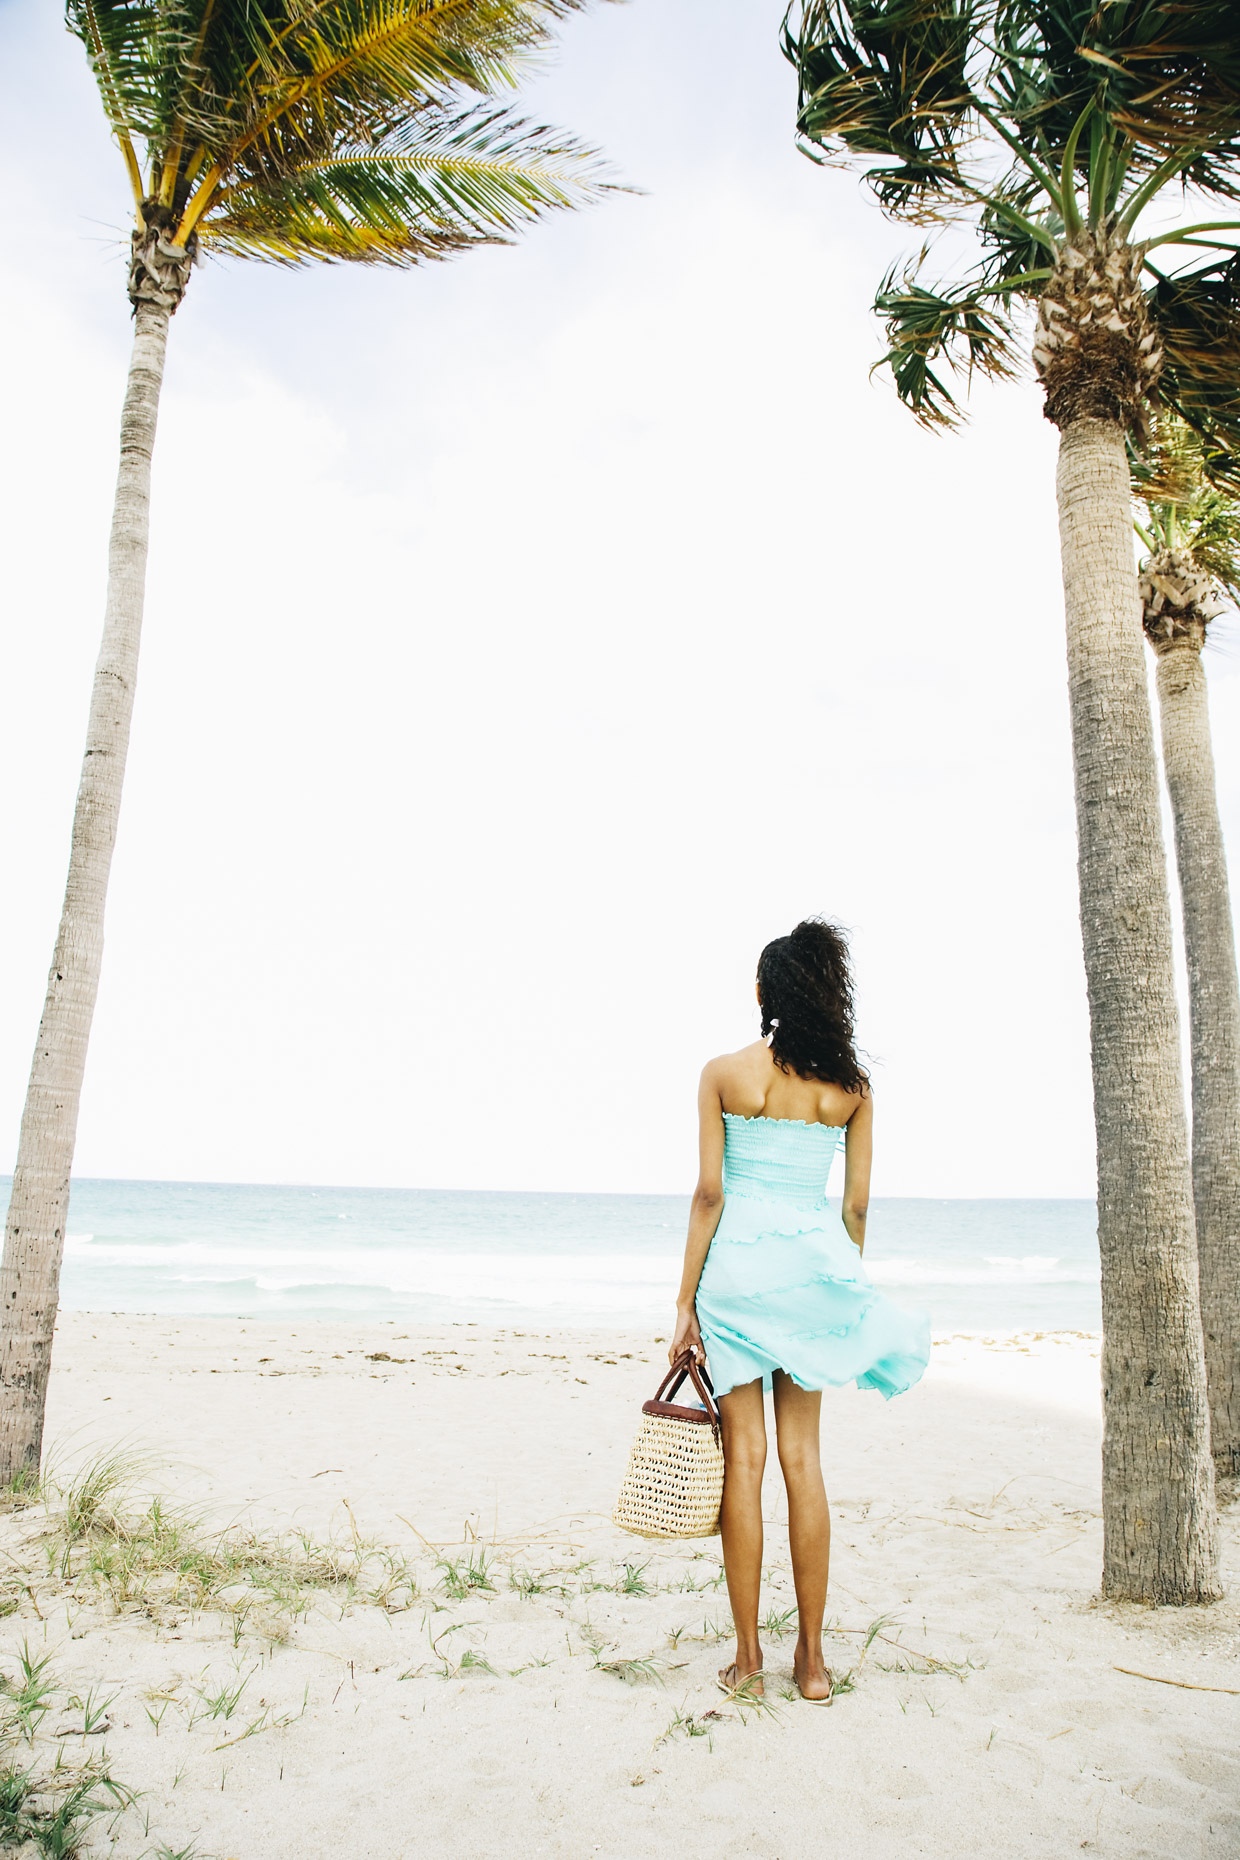 Woman standing on beach in blue dress looking at ocean